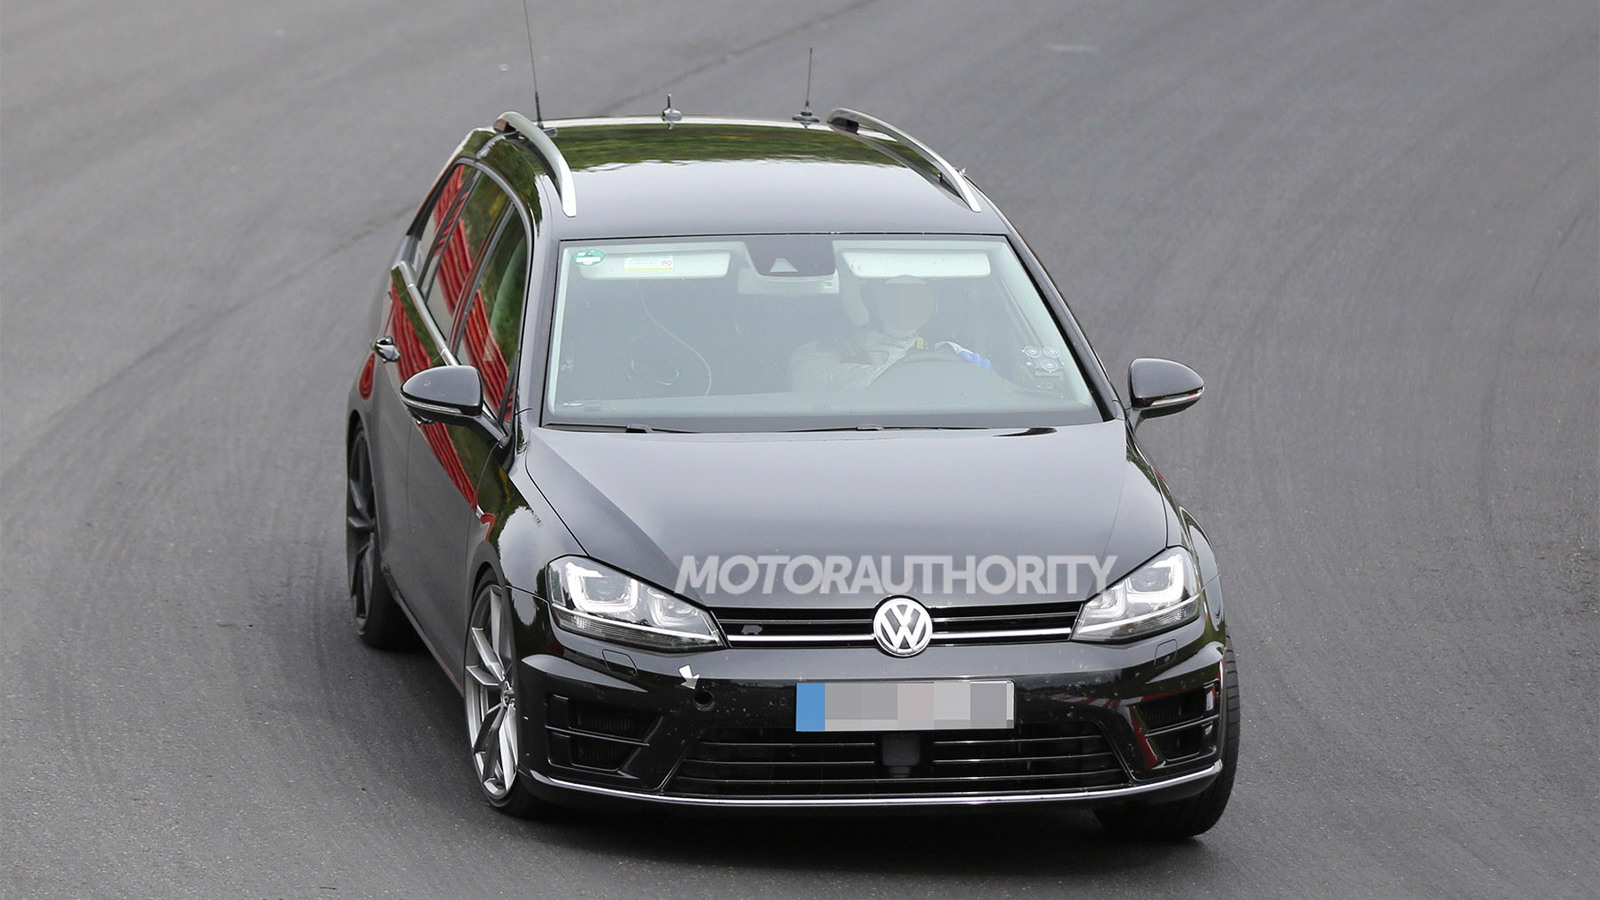 2015 Volkswagen Golf R wagon spy shots